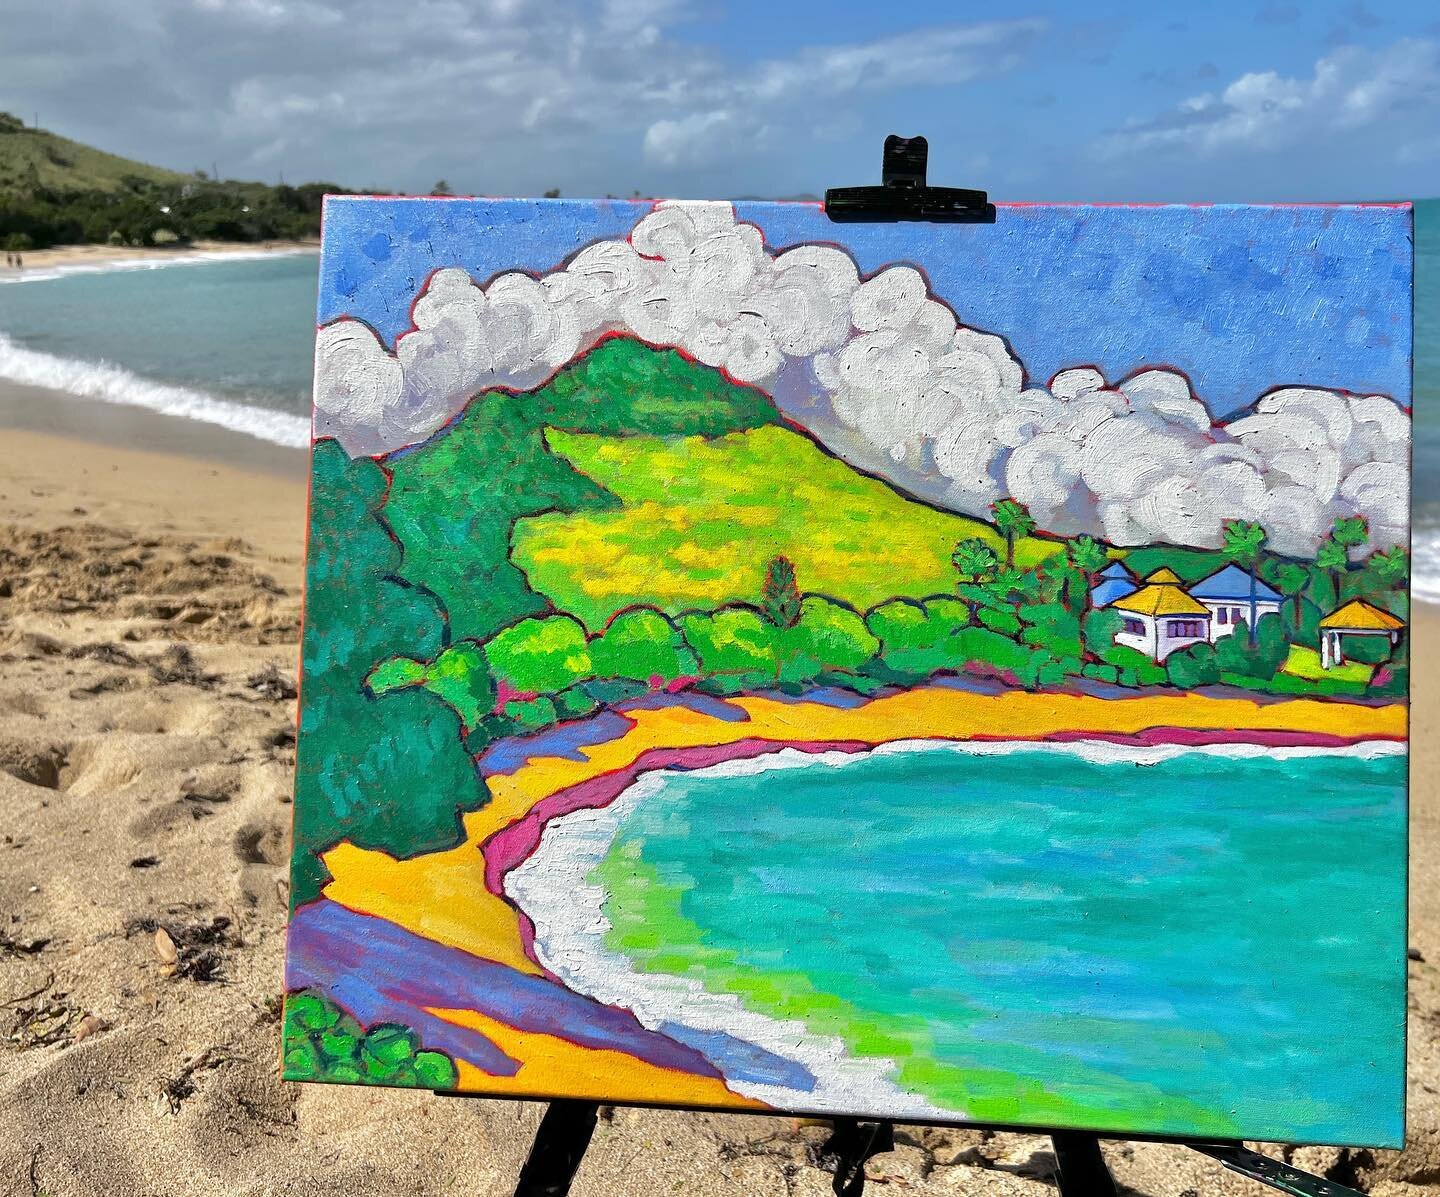 So much fun painting this morning on St. Croix&hellip; then playing disc golf &hellip; #firstvisit #stcroix #shoysbay #shoysbeach #shoysbaybeach #bucaneerhotel #stcroixbeach #discgolfstcroix #fauves #fauvist #fauvism #annegarney #pleinair #landscapep